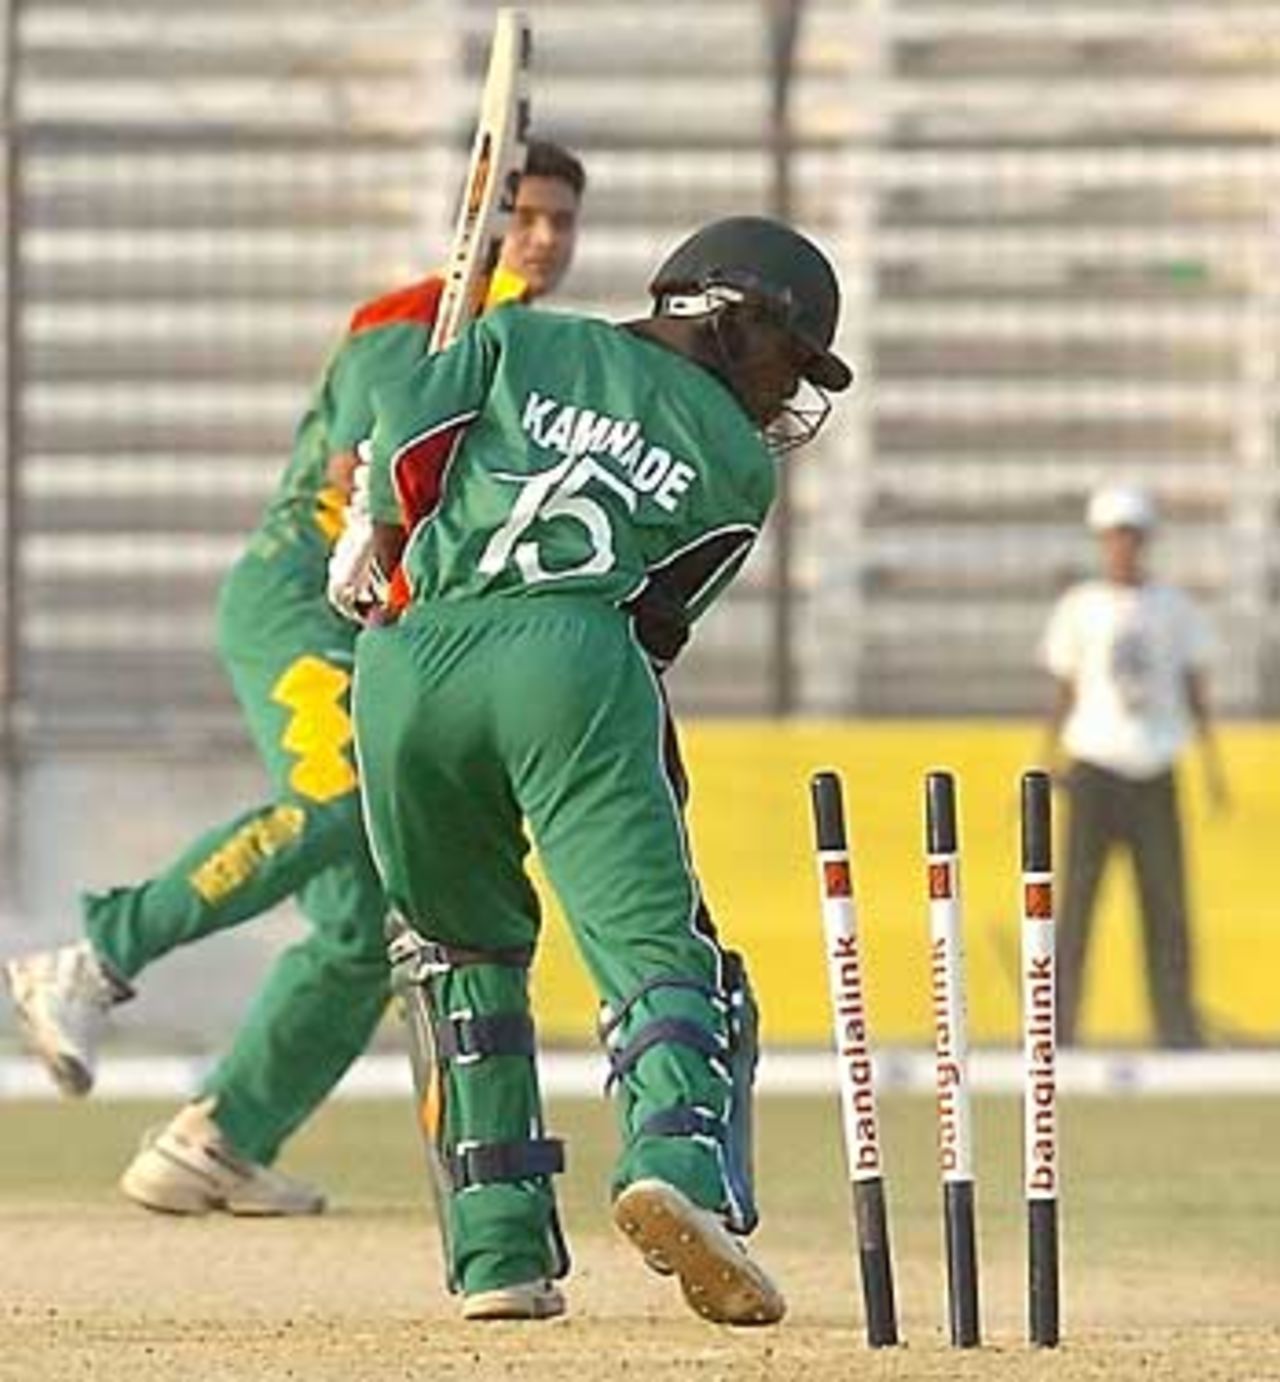 Mashrafe Mortaza shatters Jimmy Kamande's stumps, Bangladesh v Kenya, 3rd ODI, Fatullah, March 23, 2006